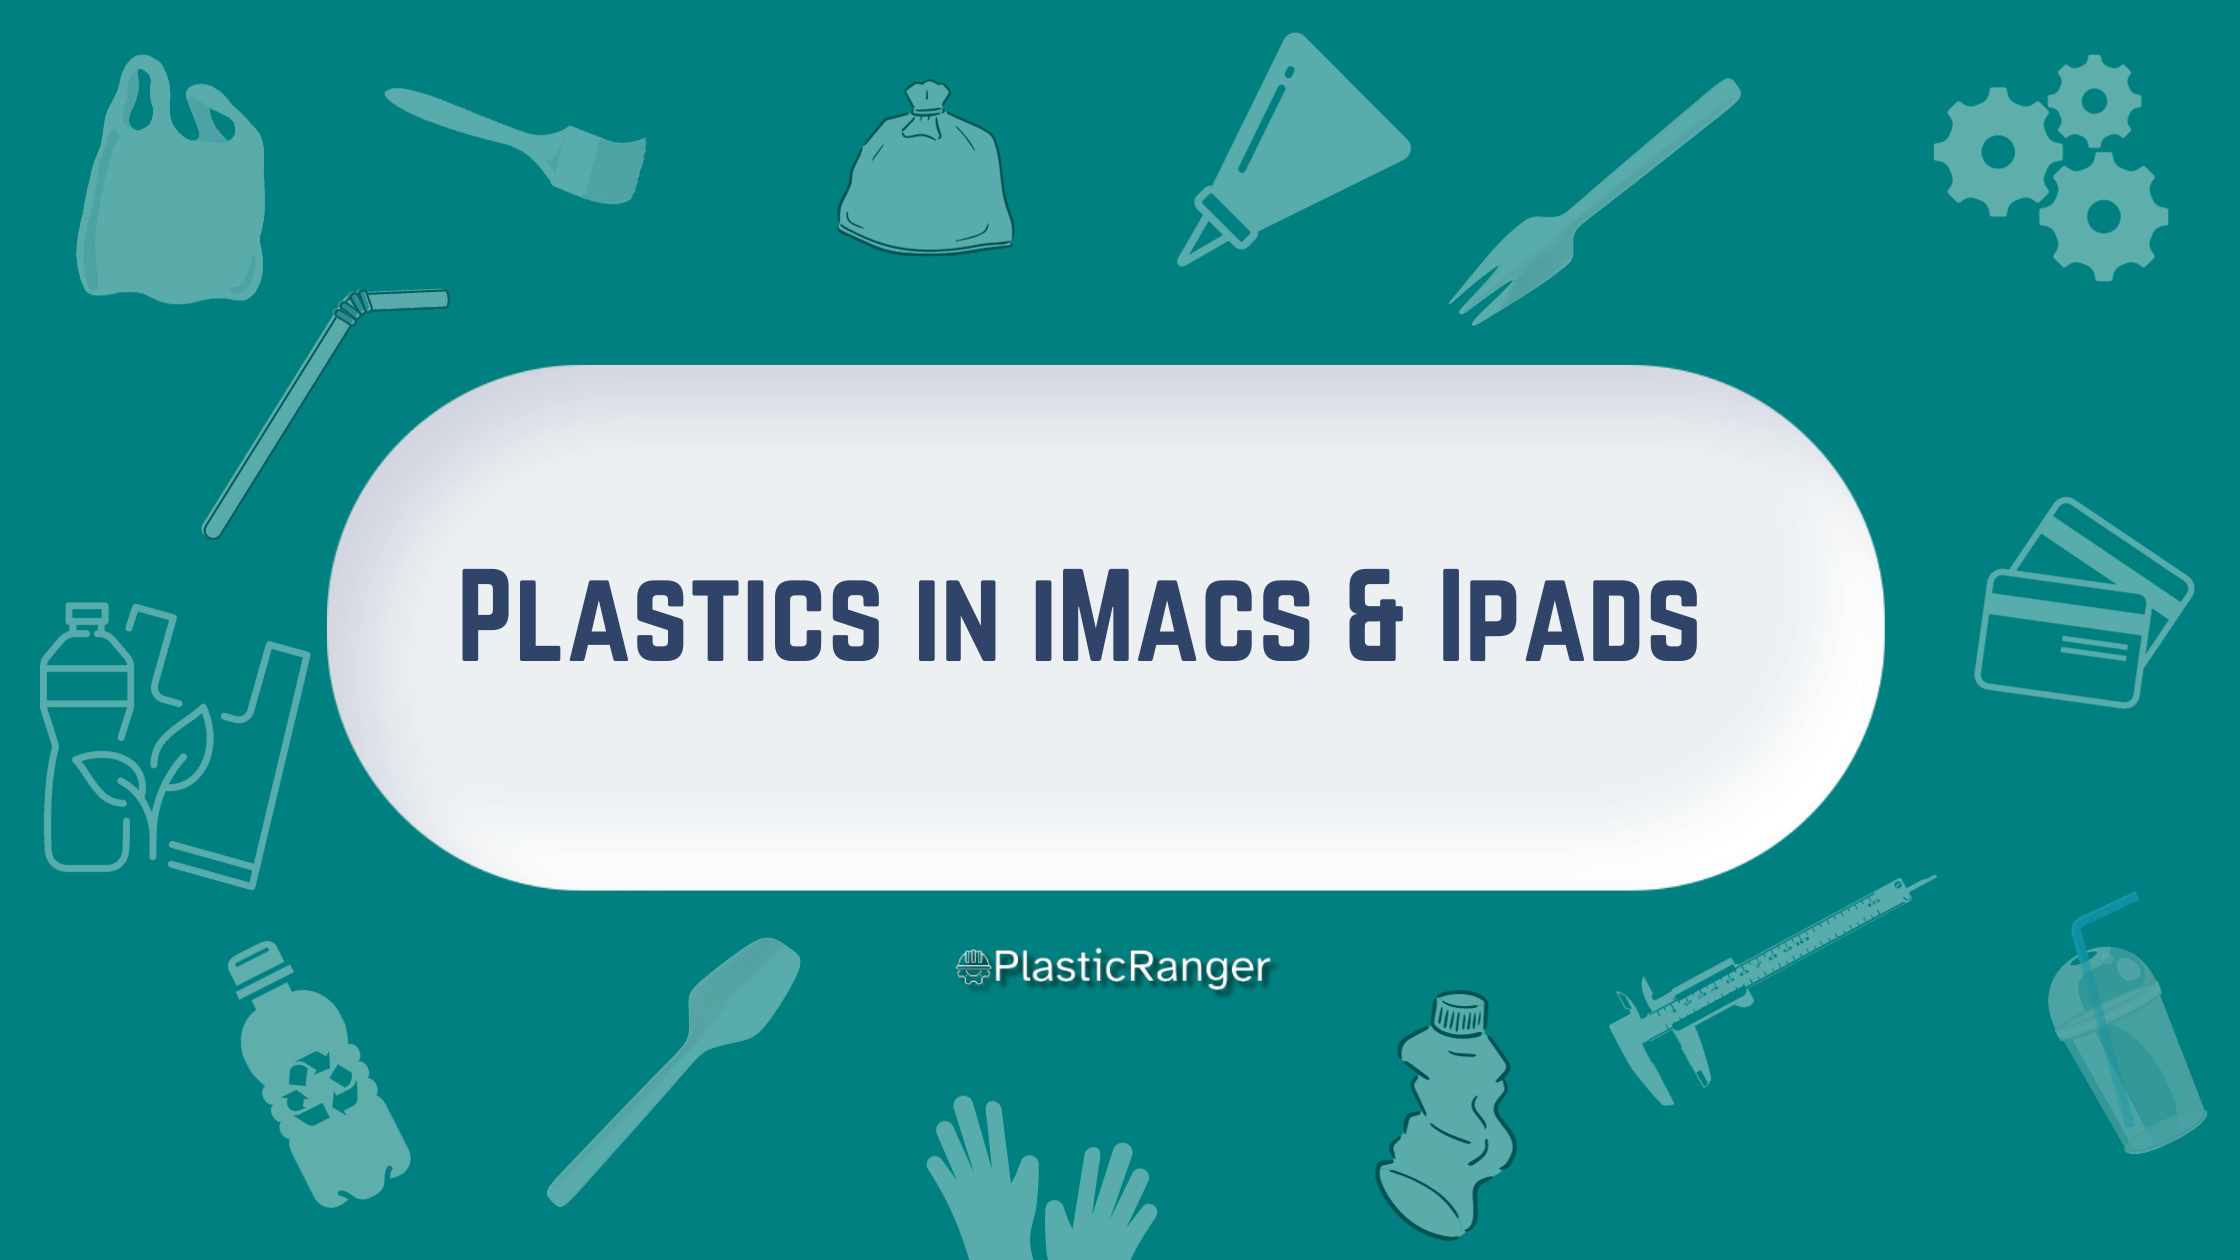 PLASTICS IN IMACS 6 IPADS